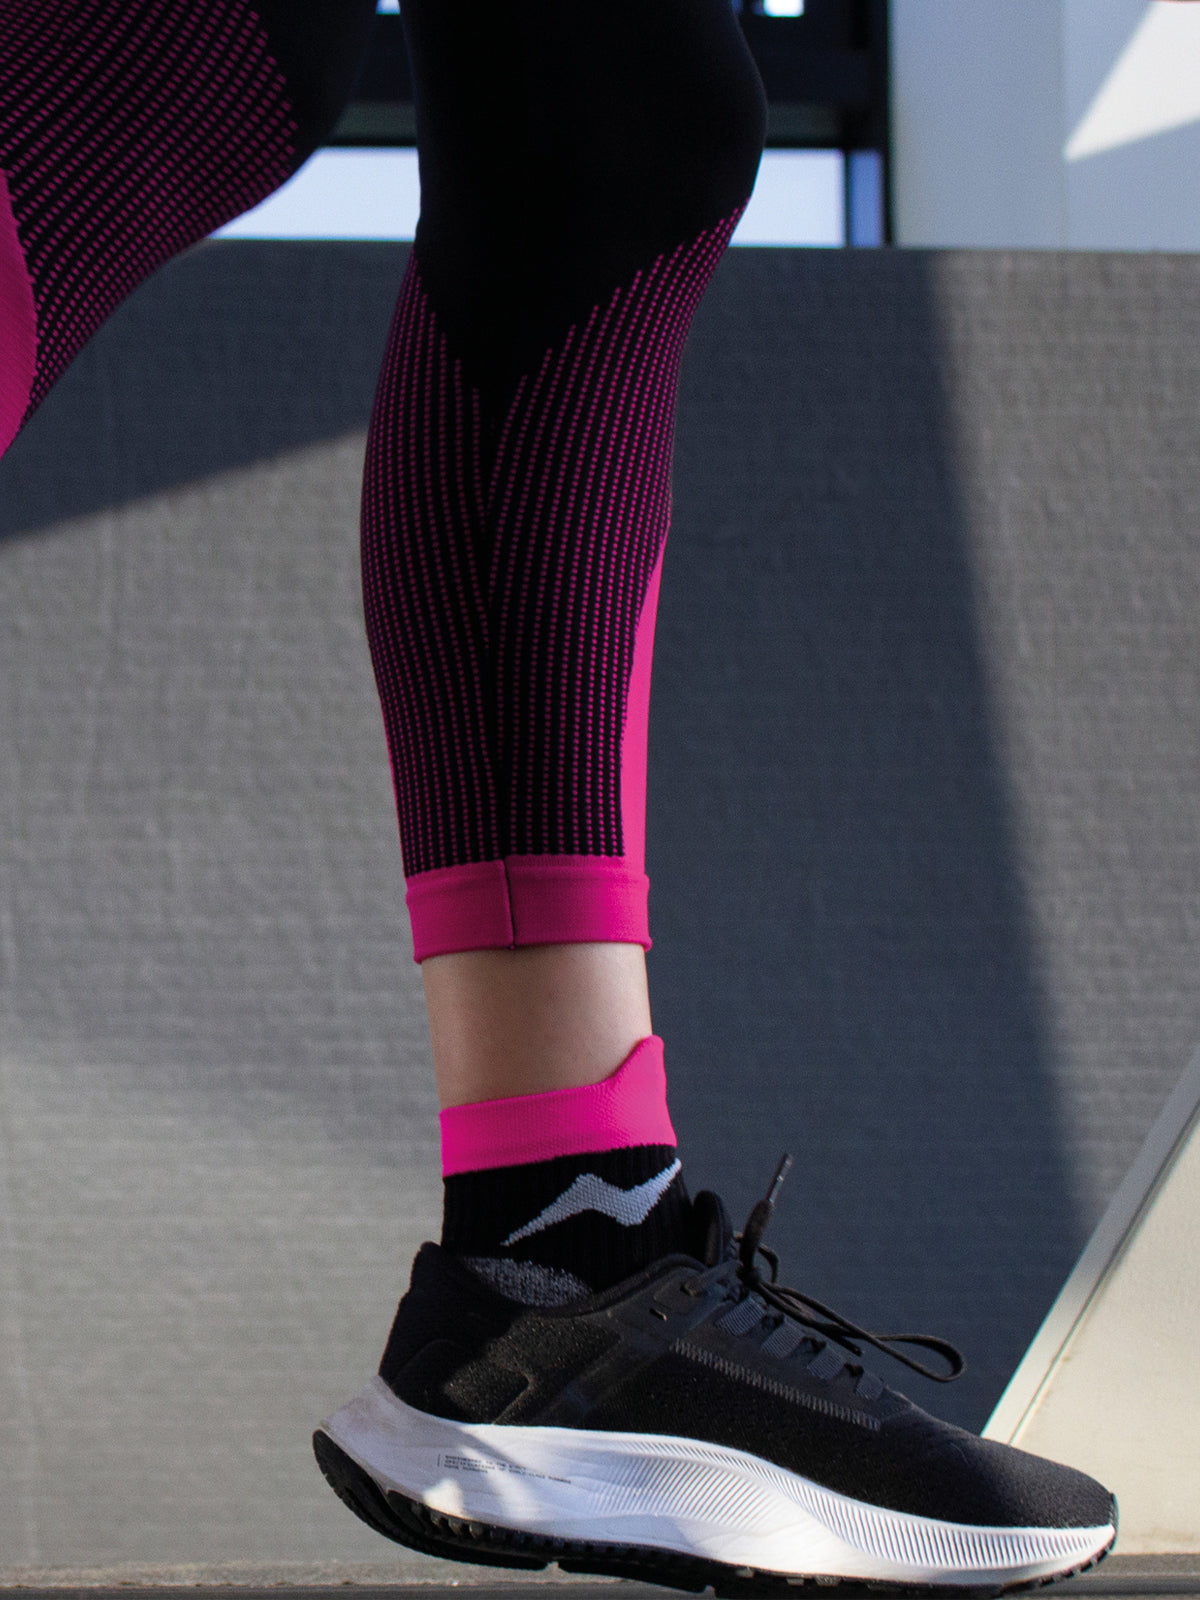 Short Dryarn Sock for Women's Running | Plain Color | Pack of 2 Pairs | PRS PRO 03D